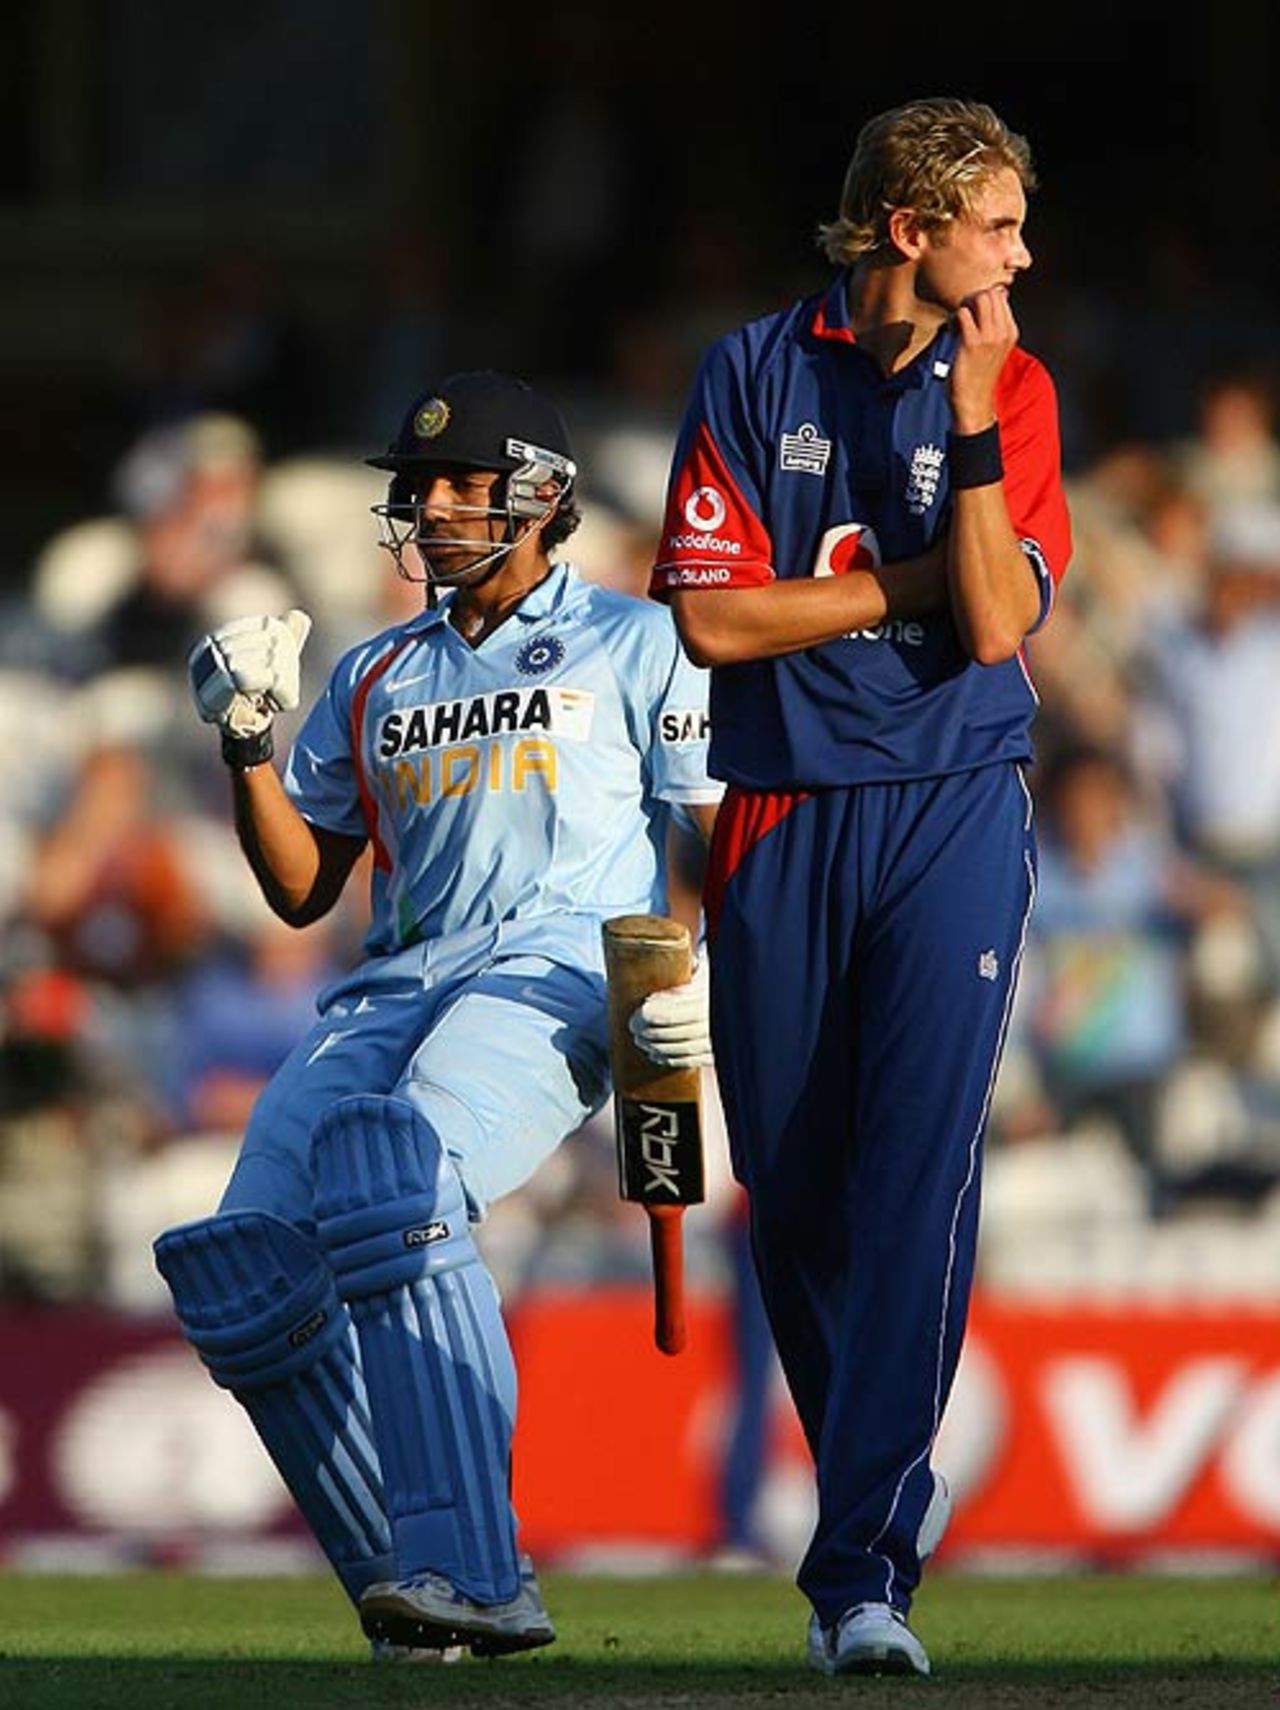 Robin Uthappa celebrates after hitting the winning runs off Stuart Broad, England v India, 6th ODI, The Oval, September 5, 2007